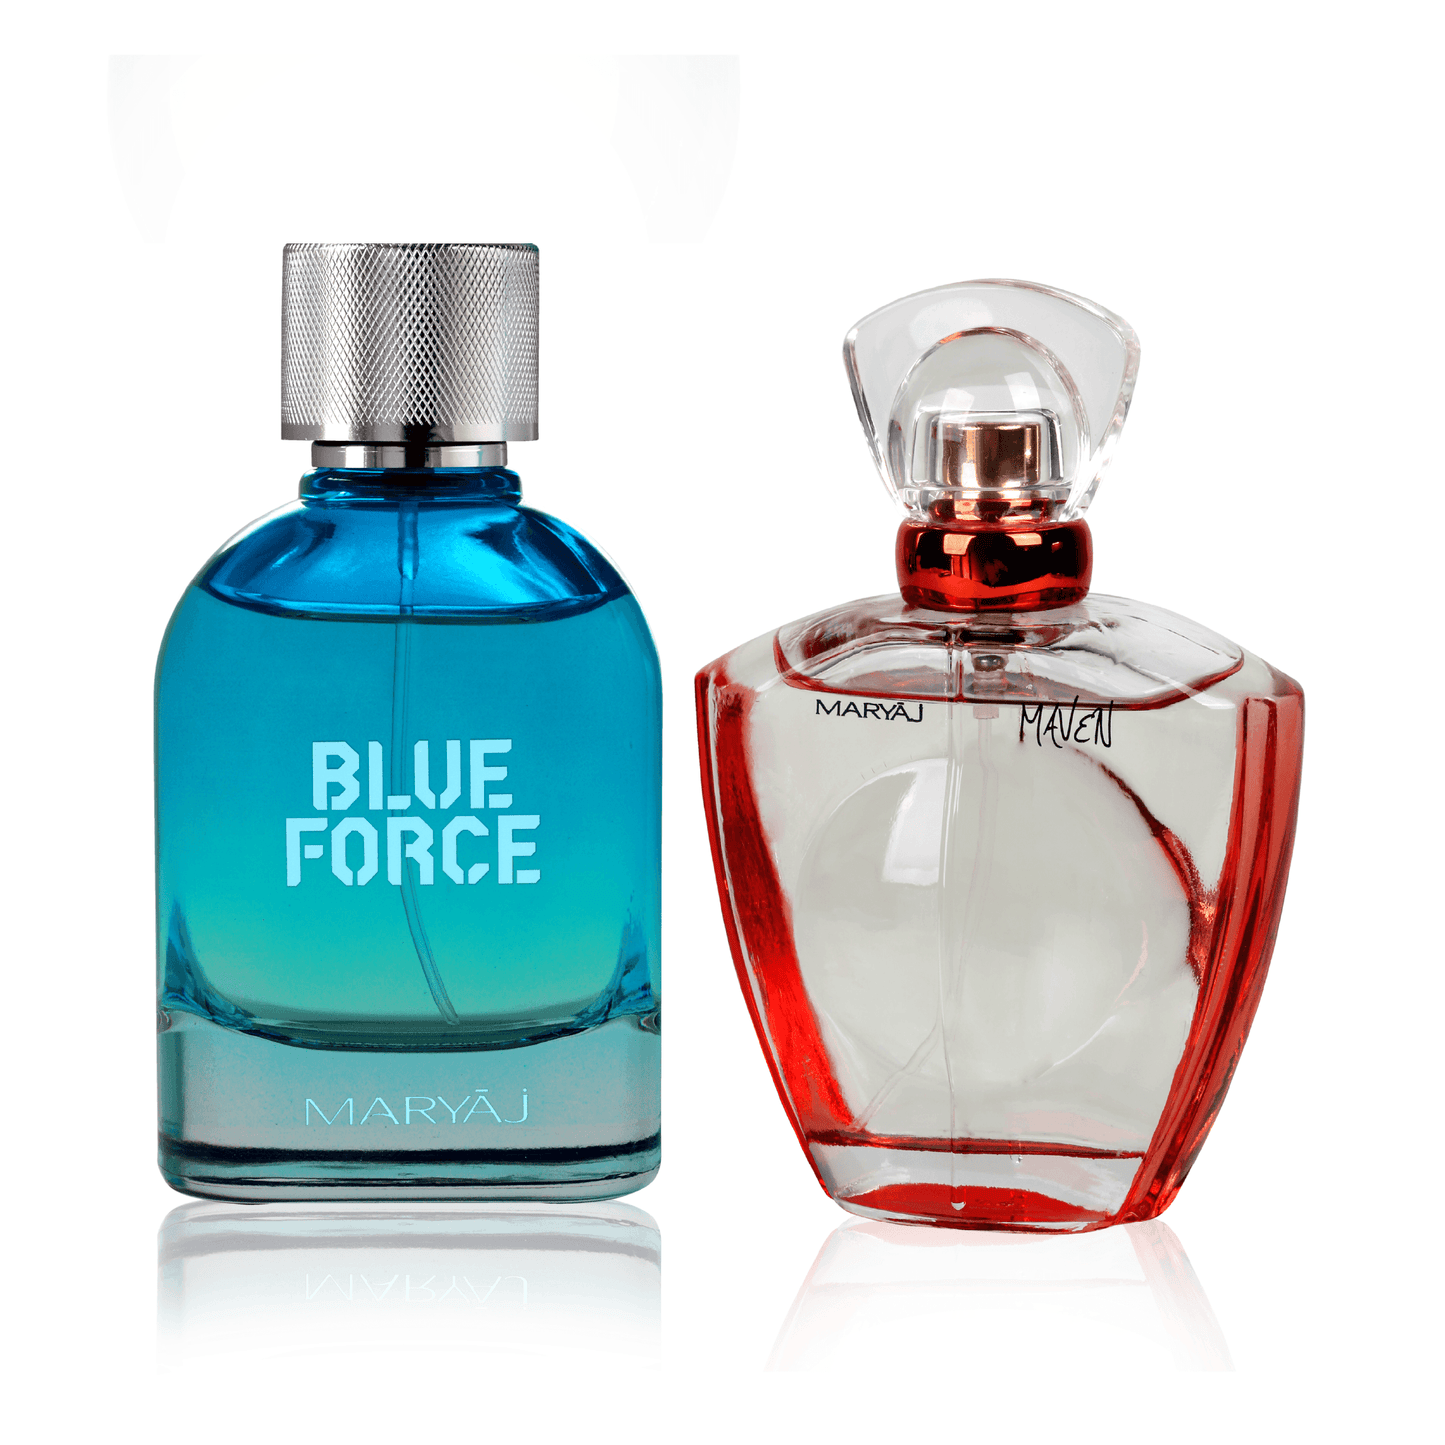 Blue Force & Maven Valentine's Day Perfume Couple Set